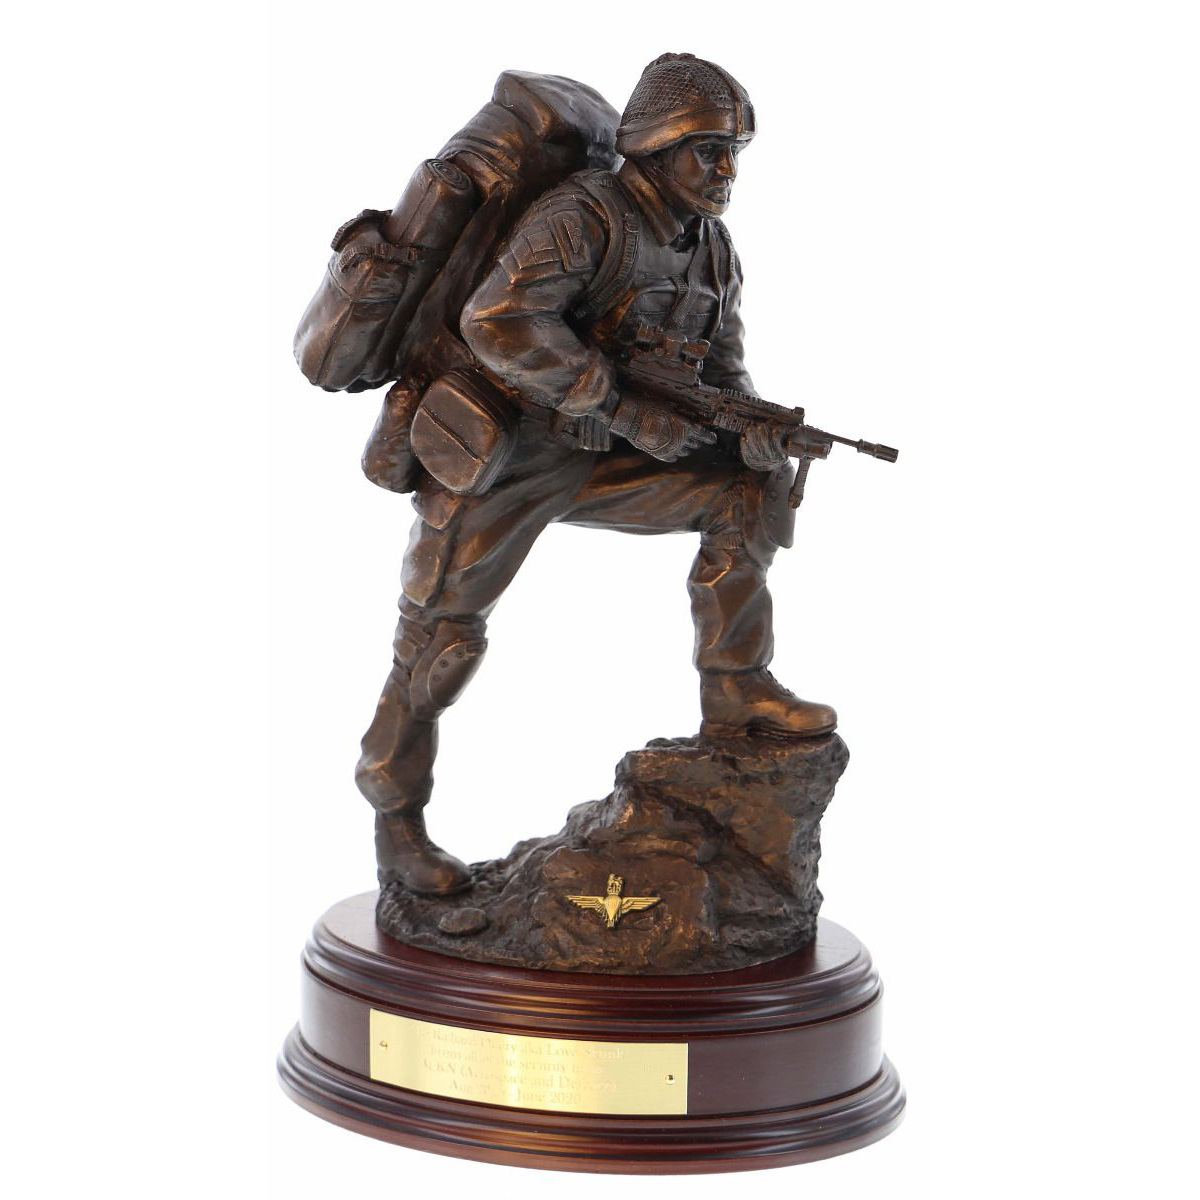 Small Soldier Figurine